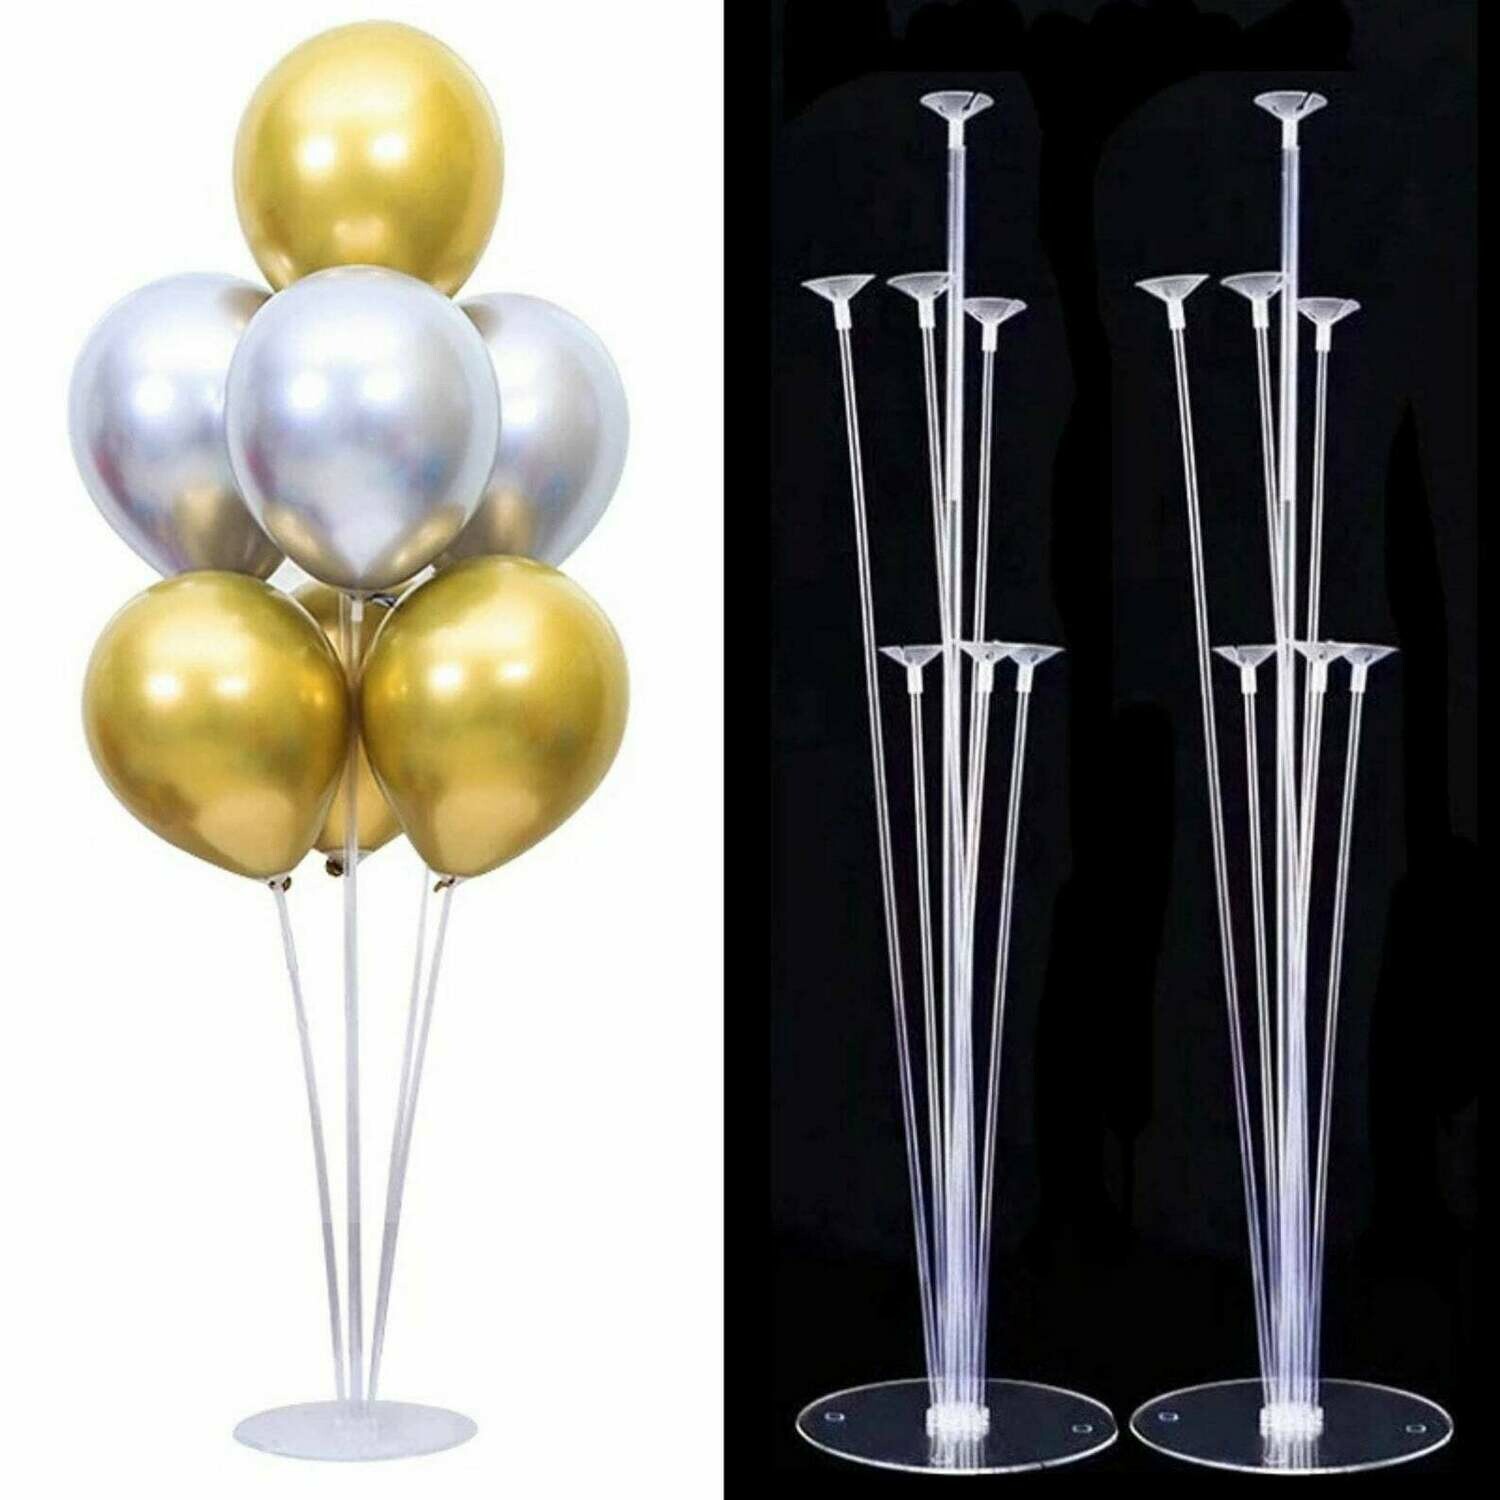 Balloon Garland Kit/Balloon Bouquet/Balloon Centerpiece/Balloon Holder for Event Decorations/Wedding Backdrop/Balloon Table Stand.